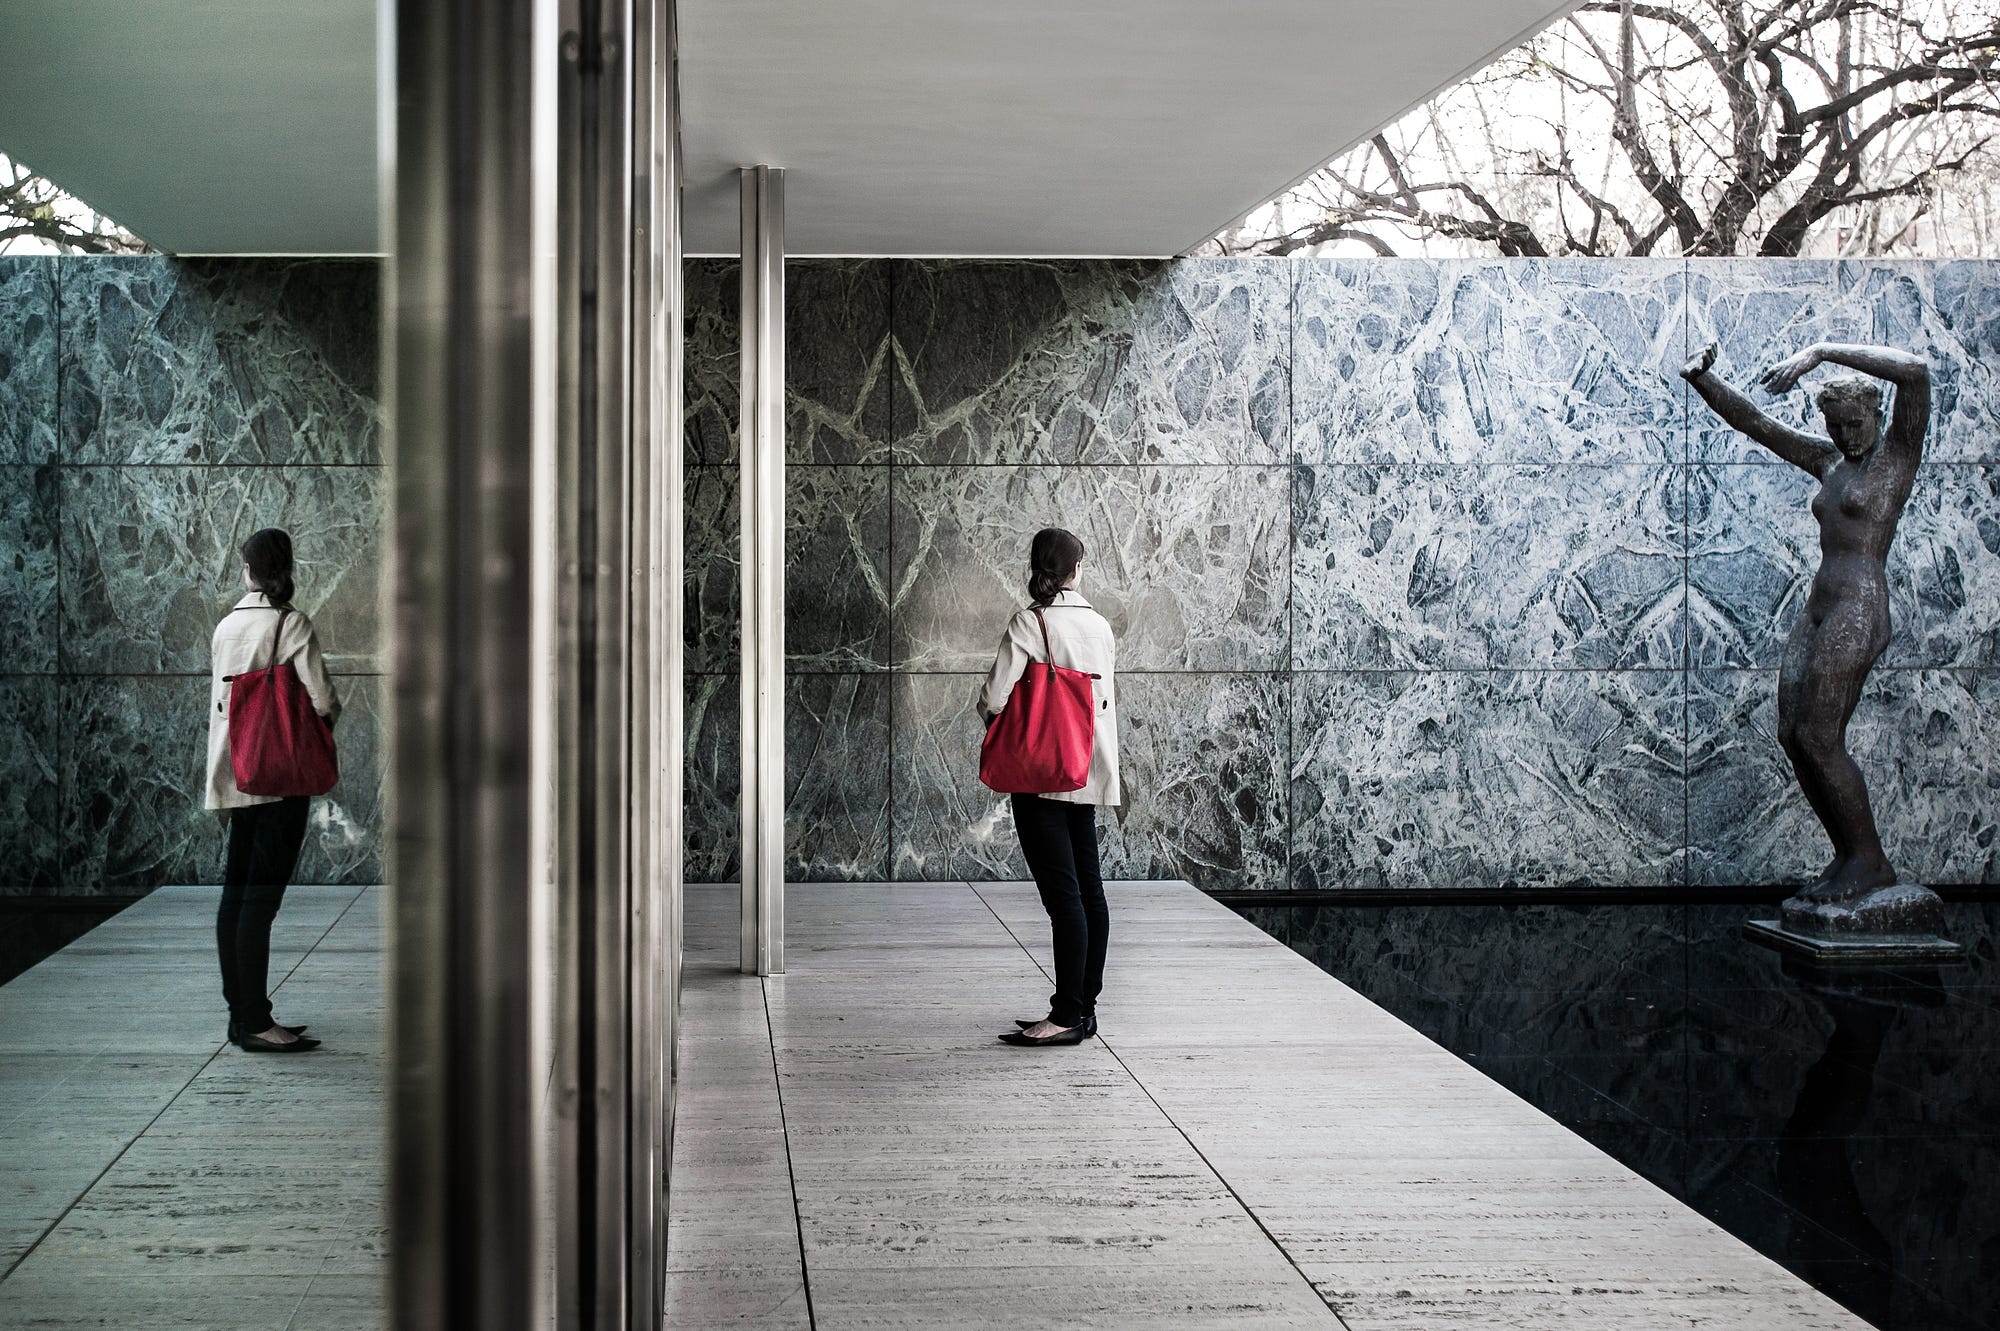 Barcelona Pavilion by Mies van der Rohe | by George X Lin | georgexlin |  Medium